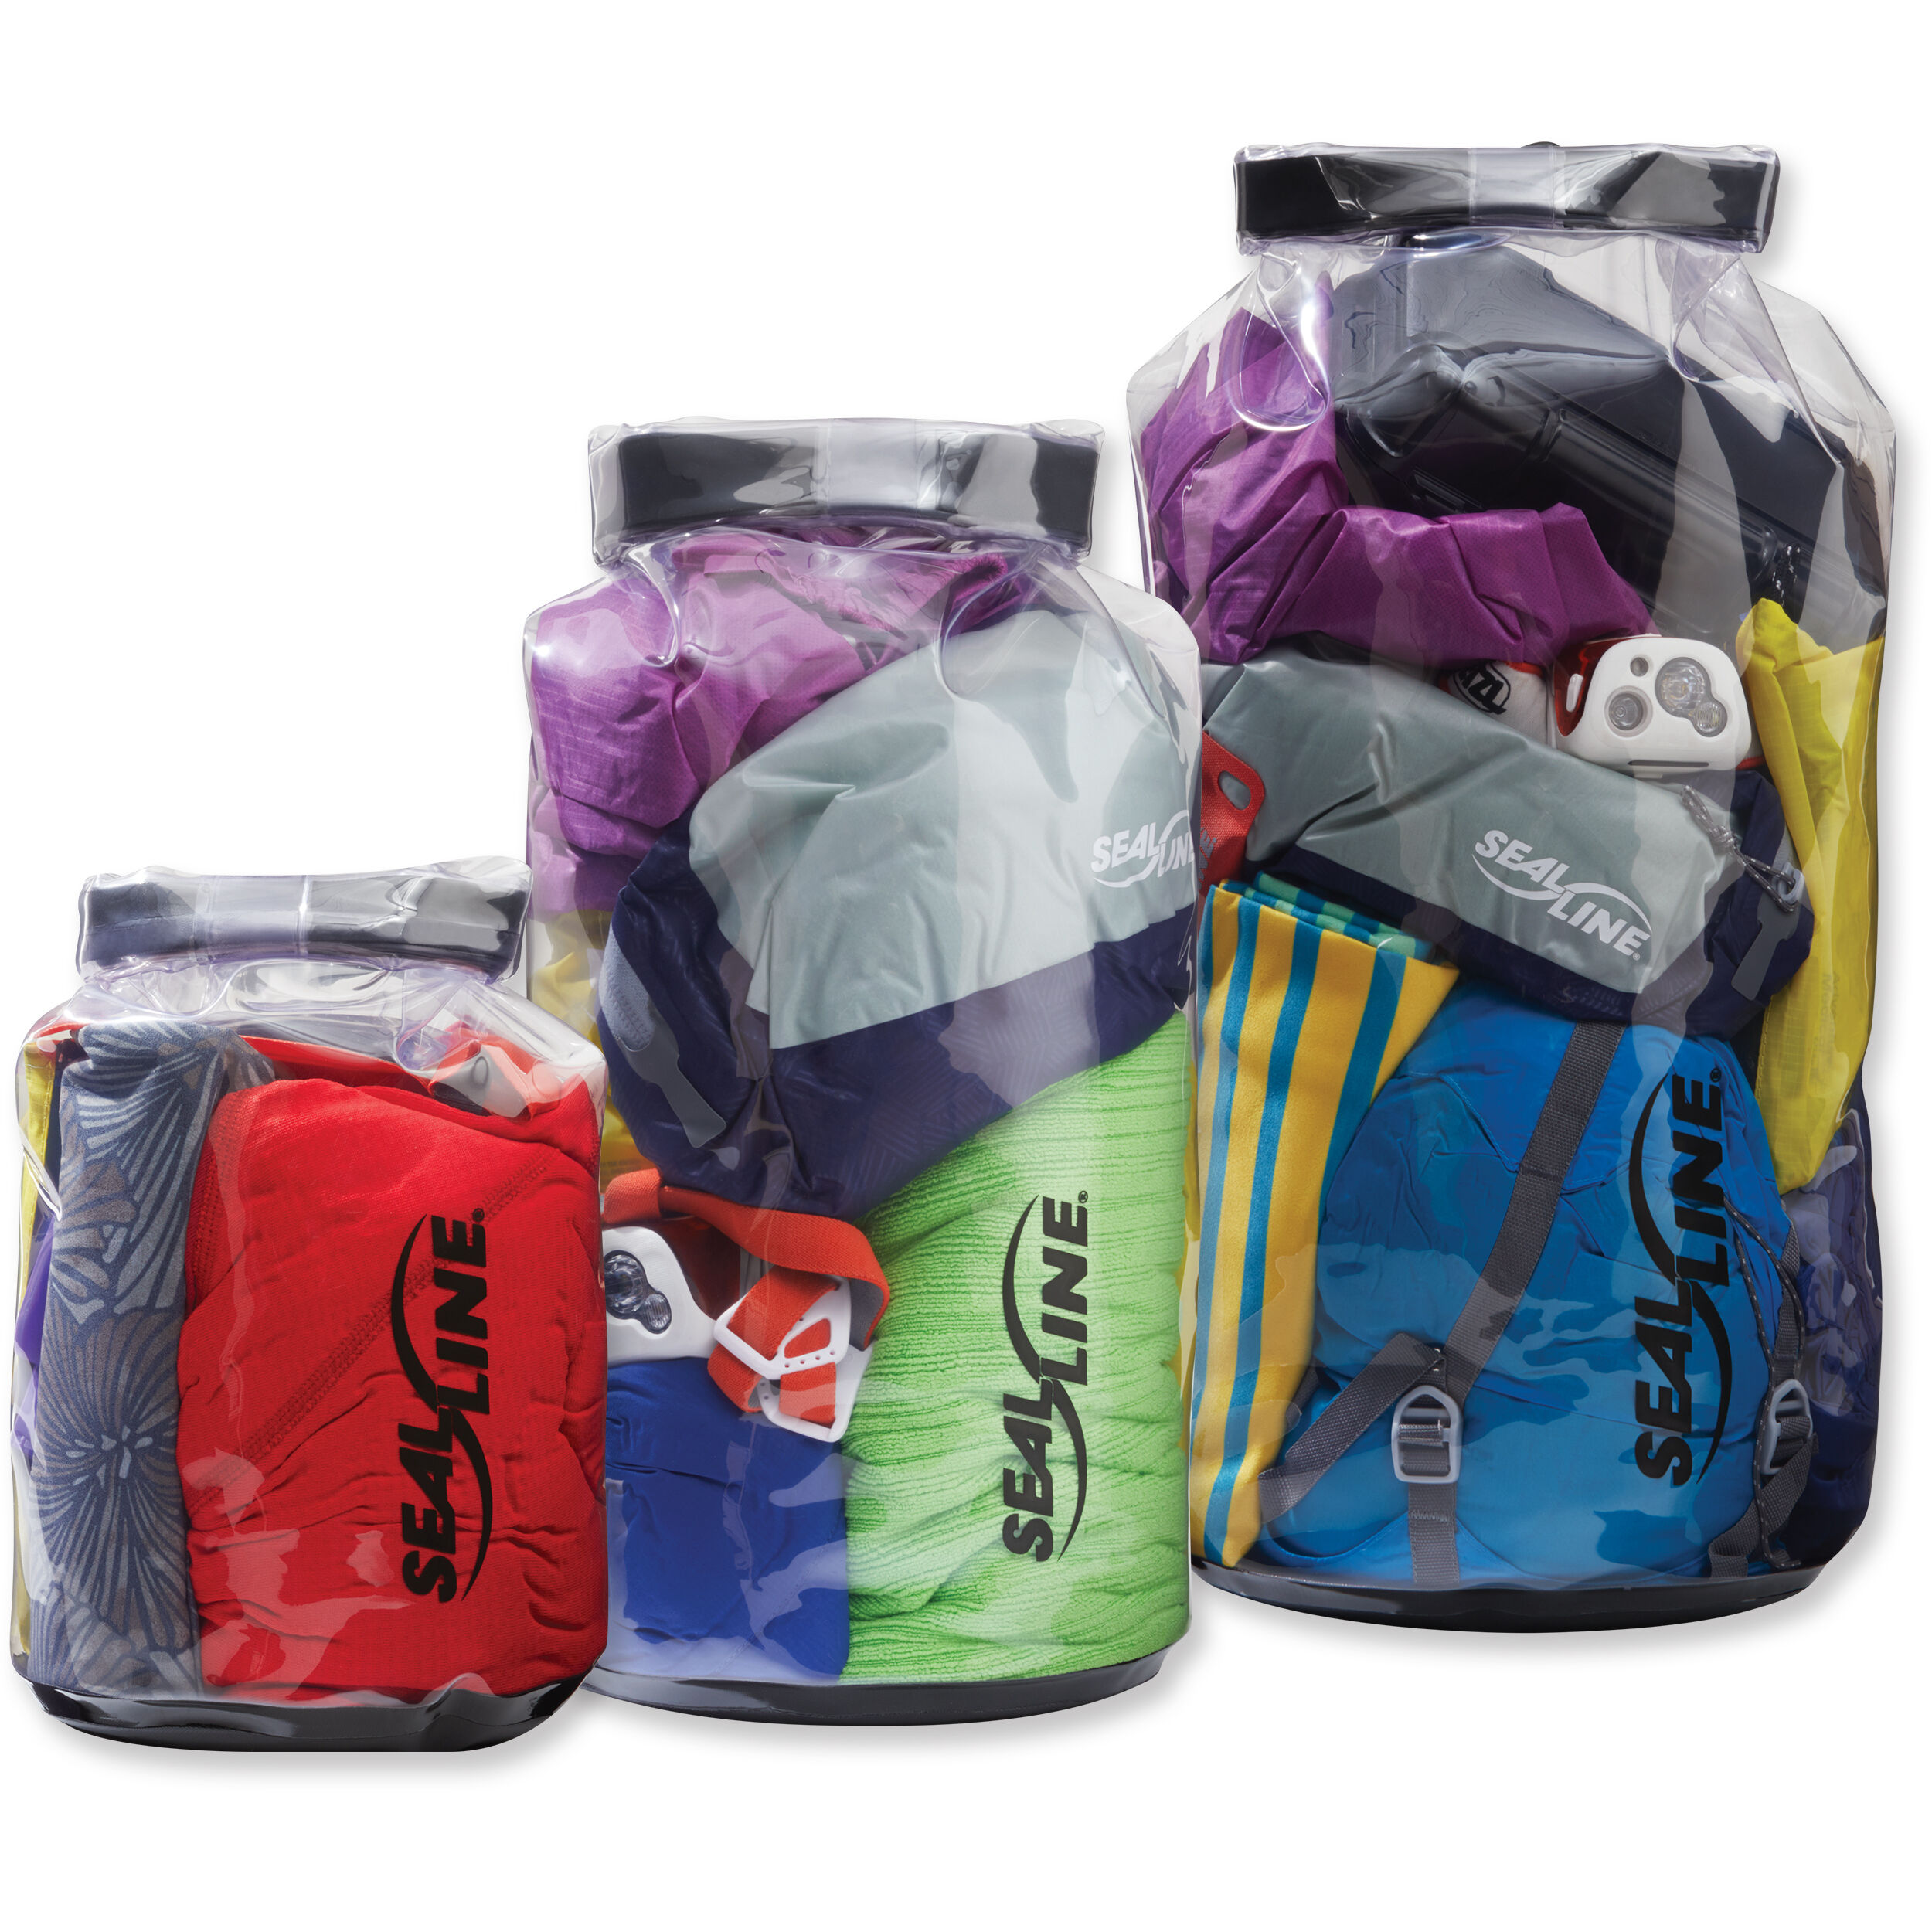 SealLine Baja 20 Dry Bag Made USA Waterproof Roll Top Outdoor Stuff Sack NEW 